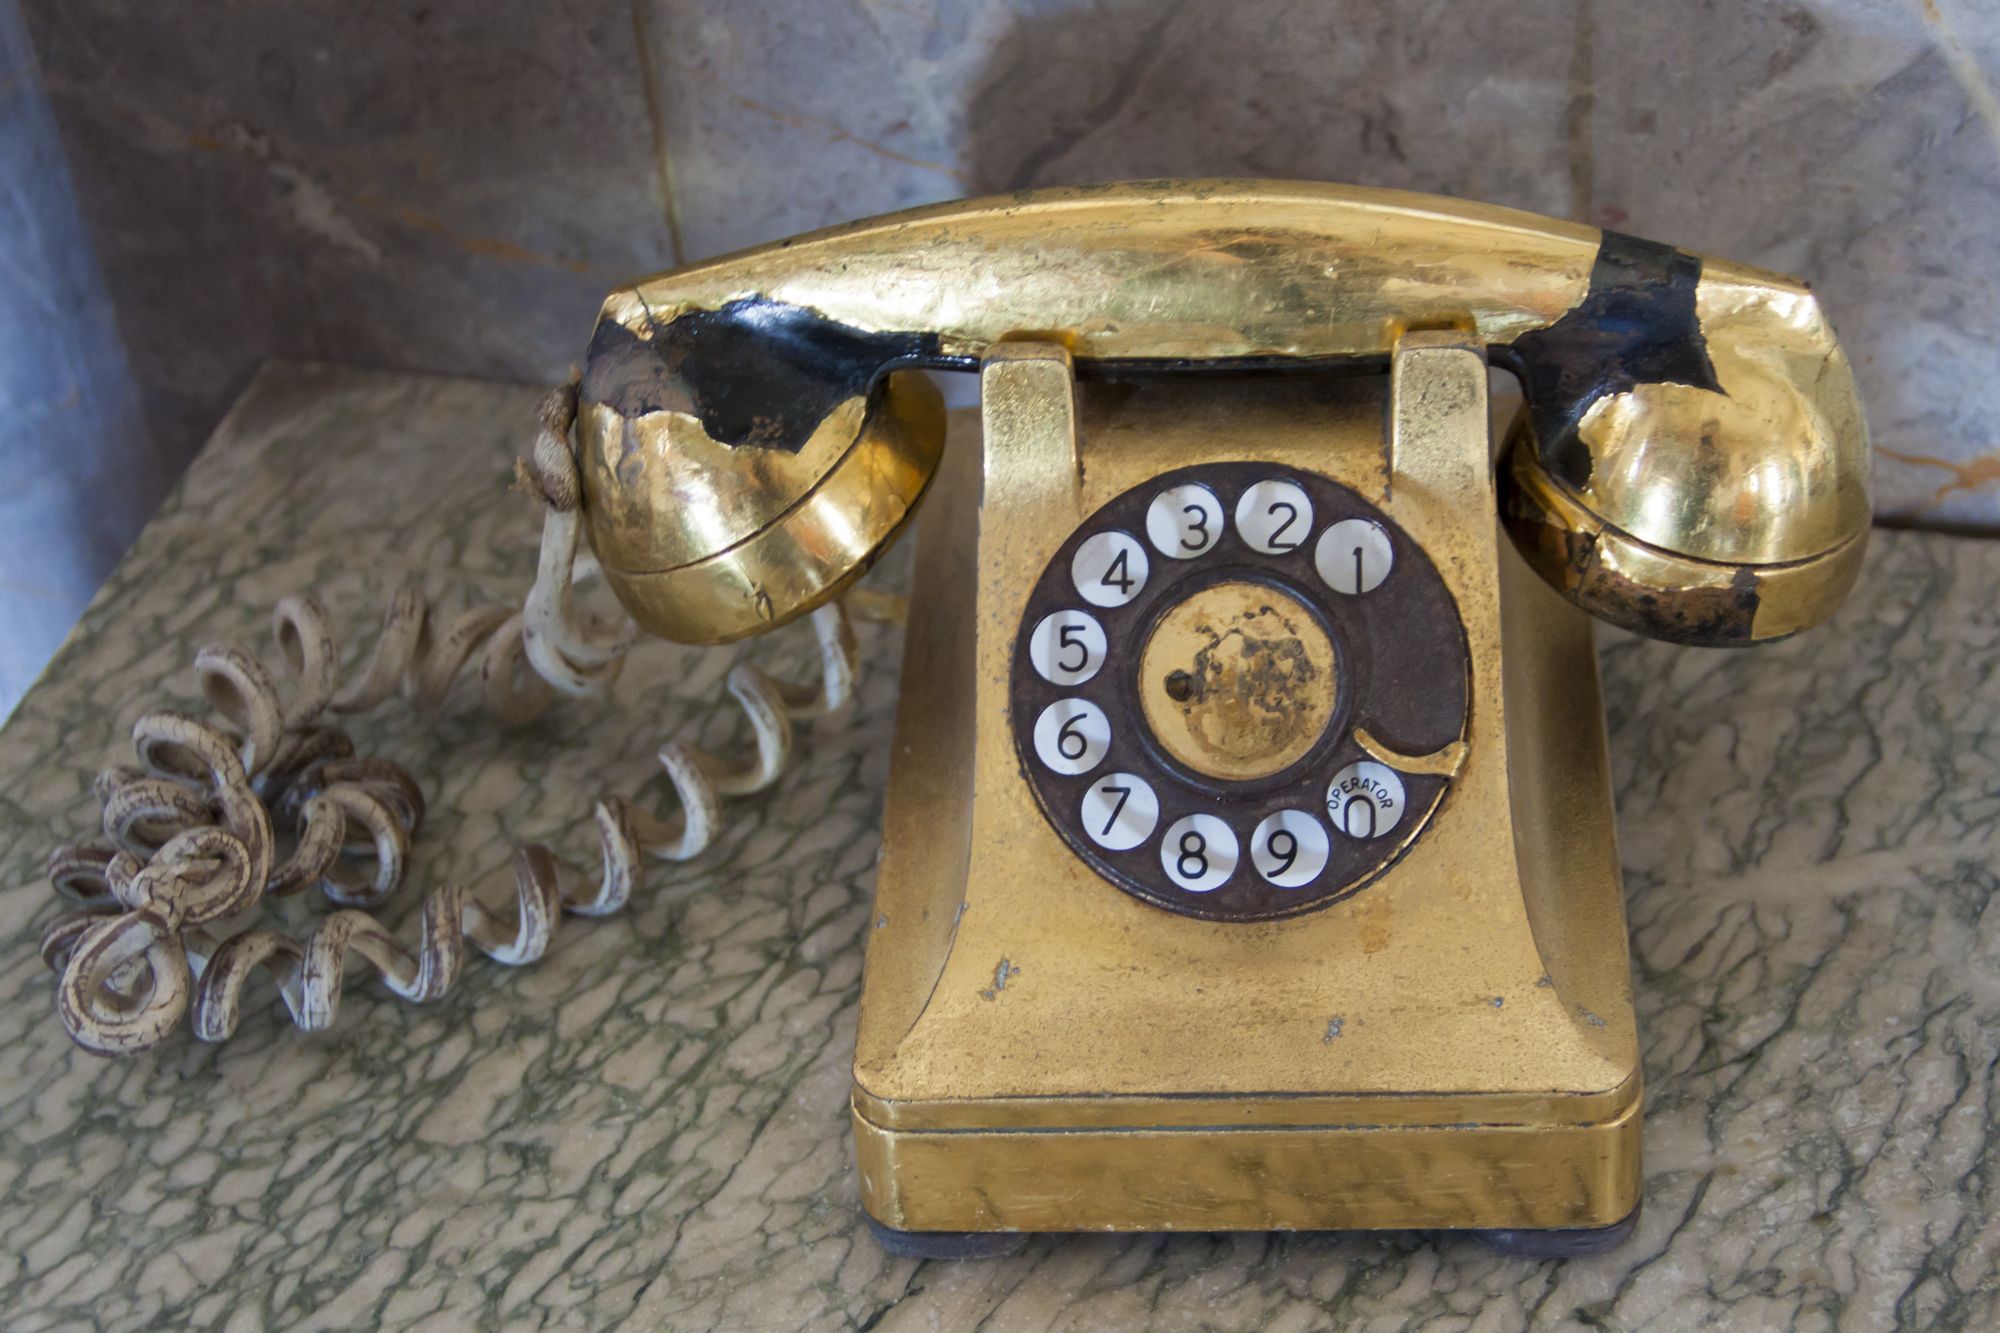 The Golden Telephone